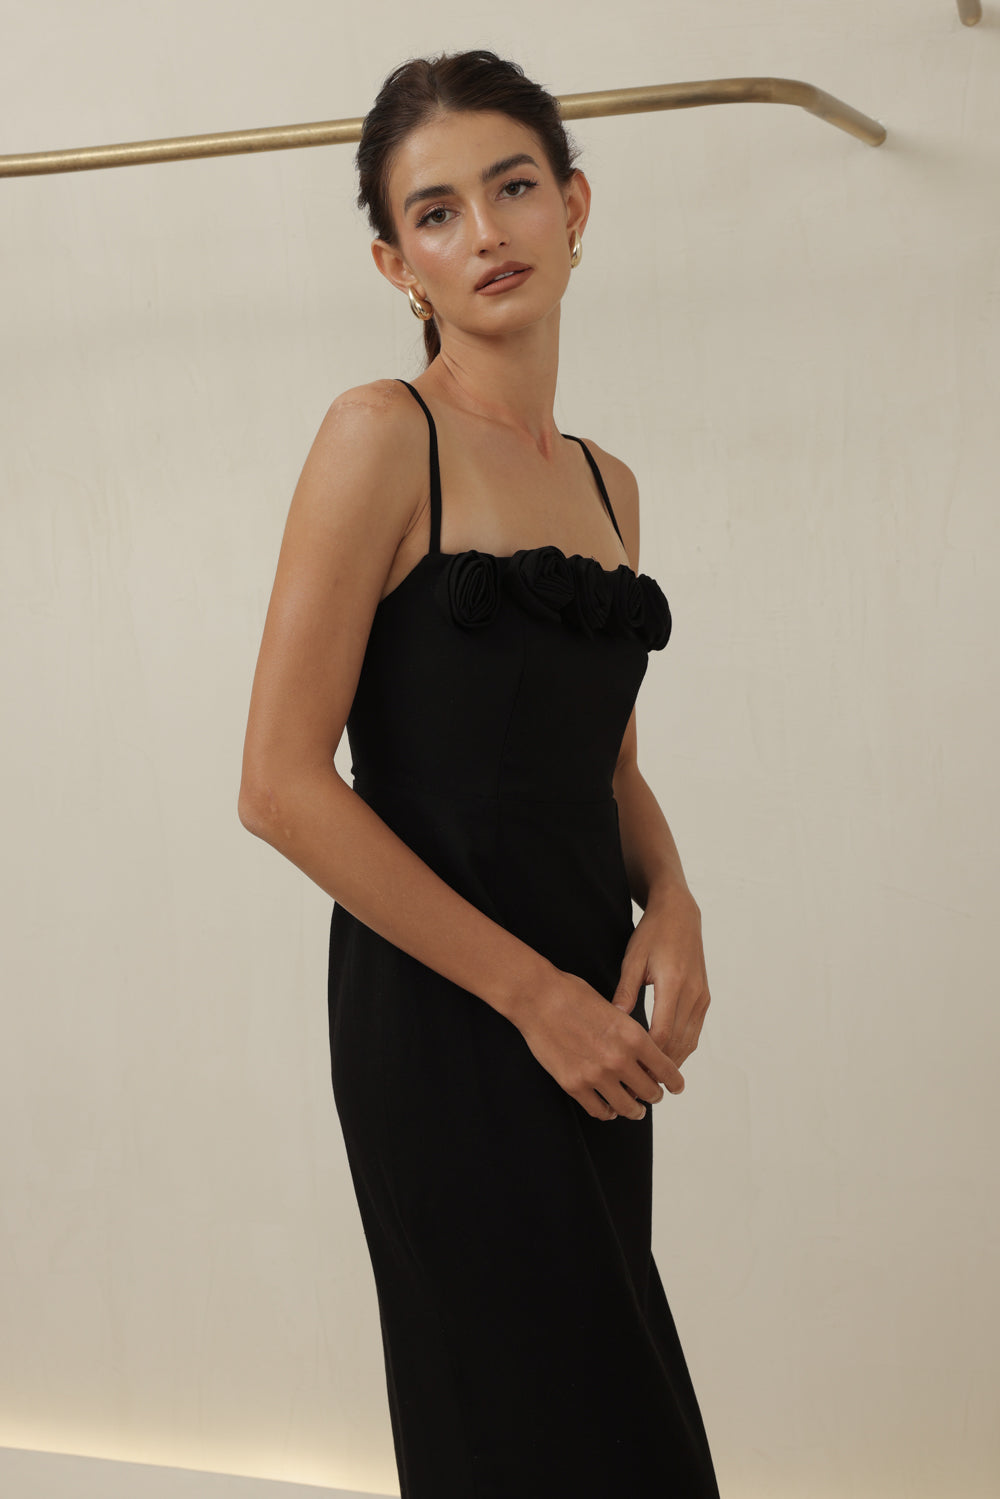 MONET DRESS Straight Neckline Strappy Midi Pencil Skirt Dress with Floral Details (Black Linen)